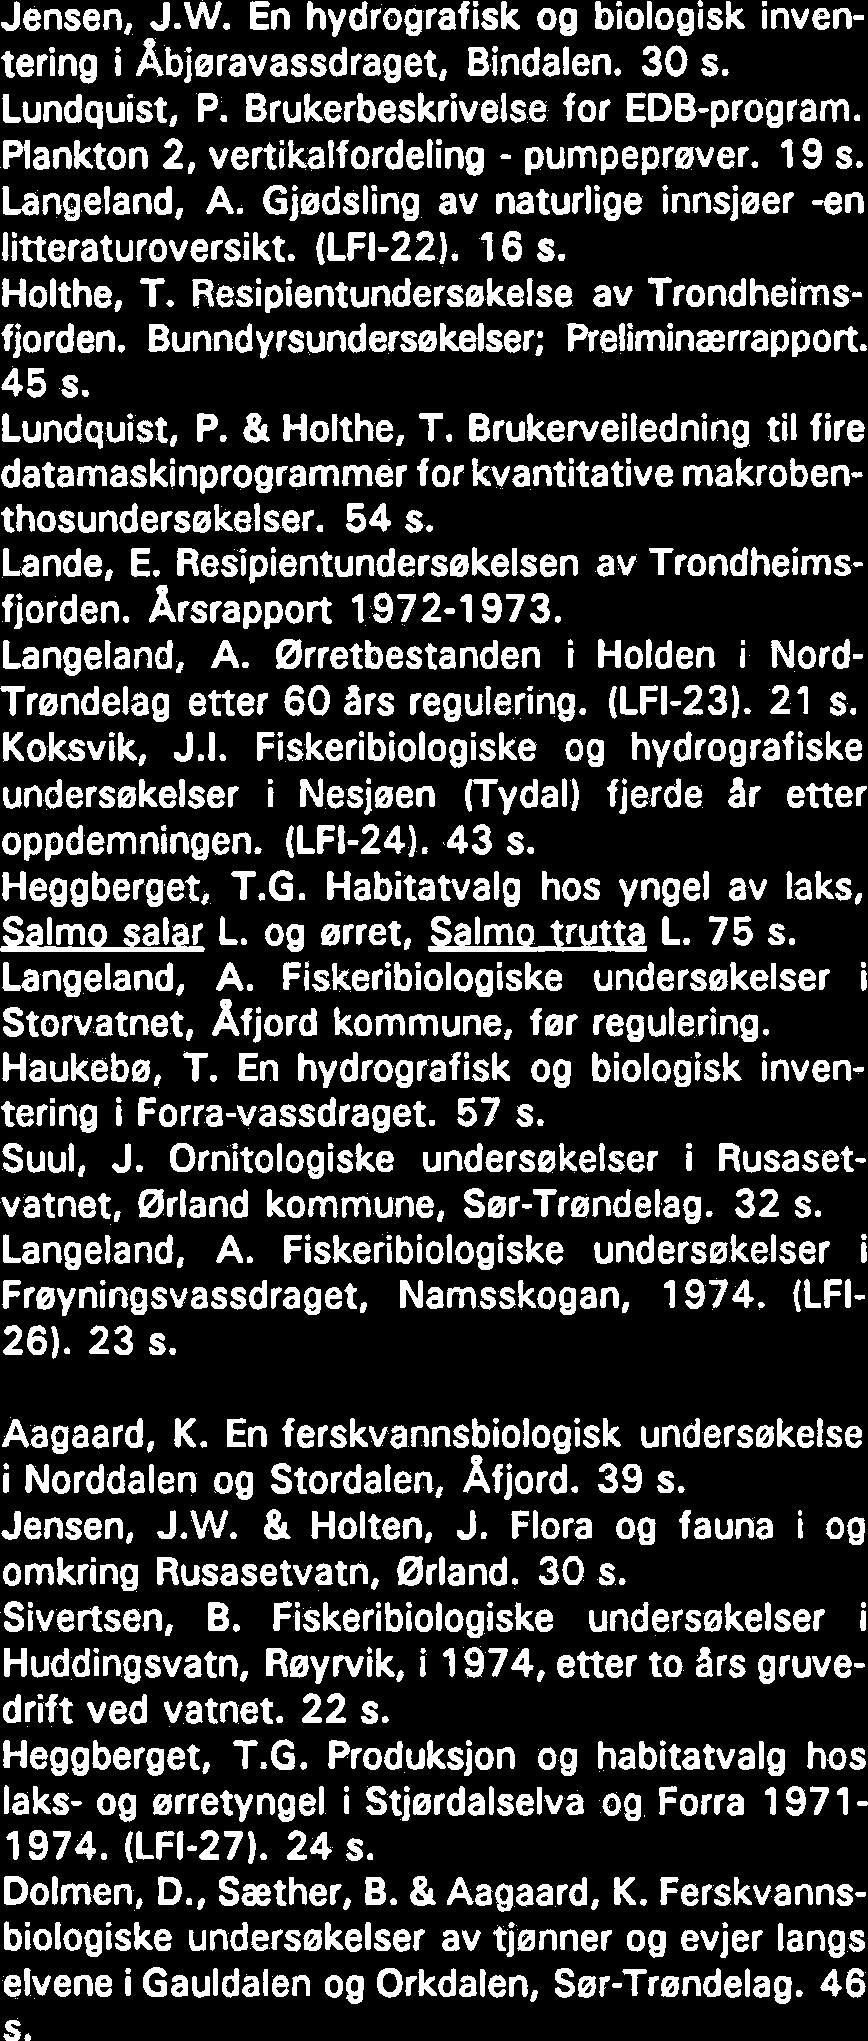 Fiskeribiologiske undersekelser i de lakseferende deler av Abjeravassdraget 1973. (LFI-23). 15 S. Jensen, J.W. En hydrografisk og biologisk inventering i Abjeravassdraget, Bindalen. 30 s.